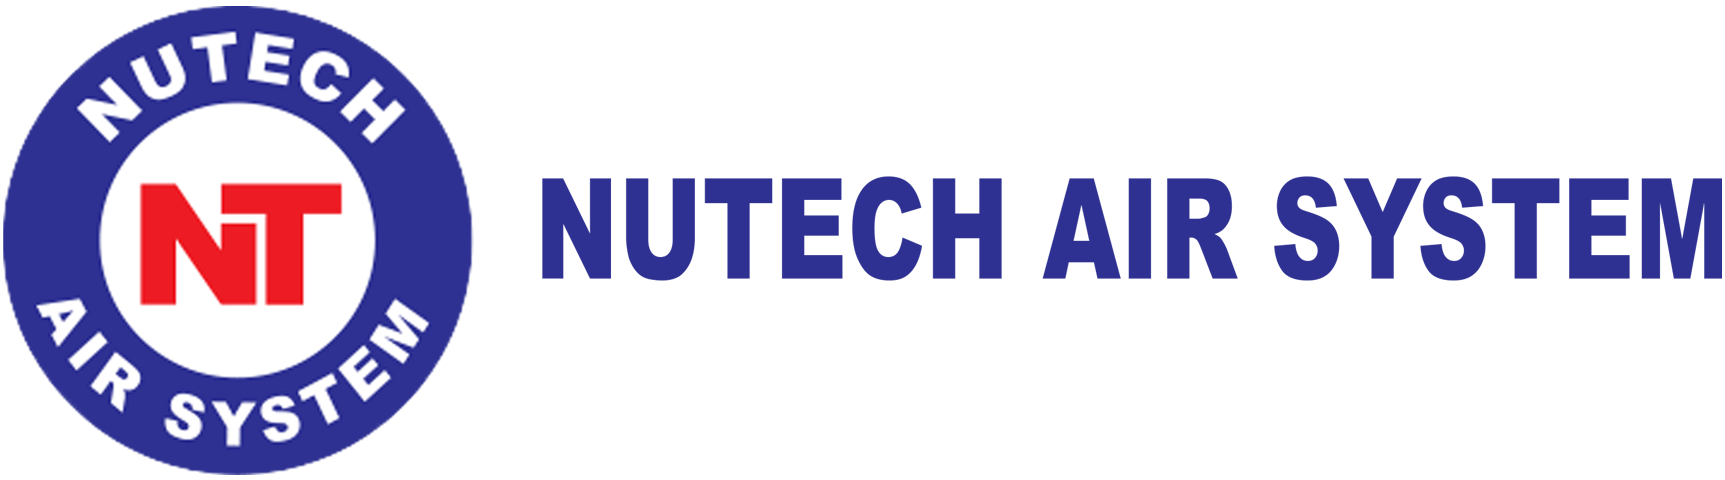 Nutech Air System - HVAC Furnace Repair - Brampton